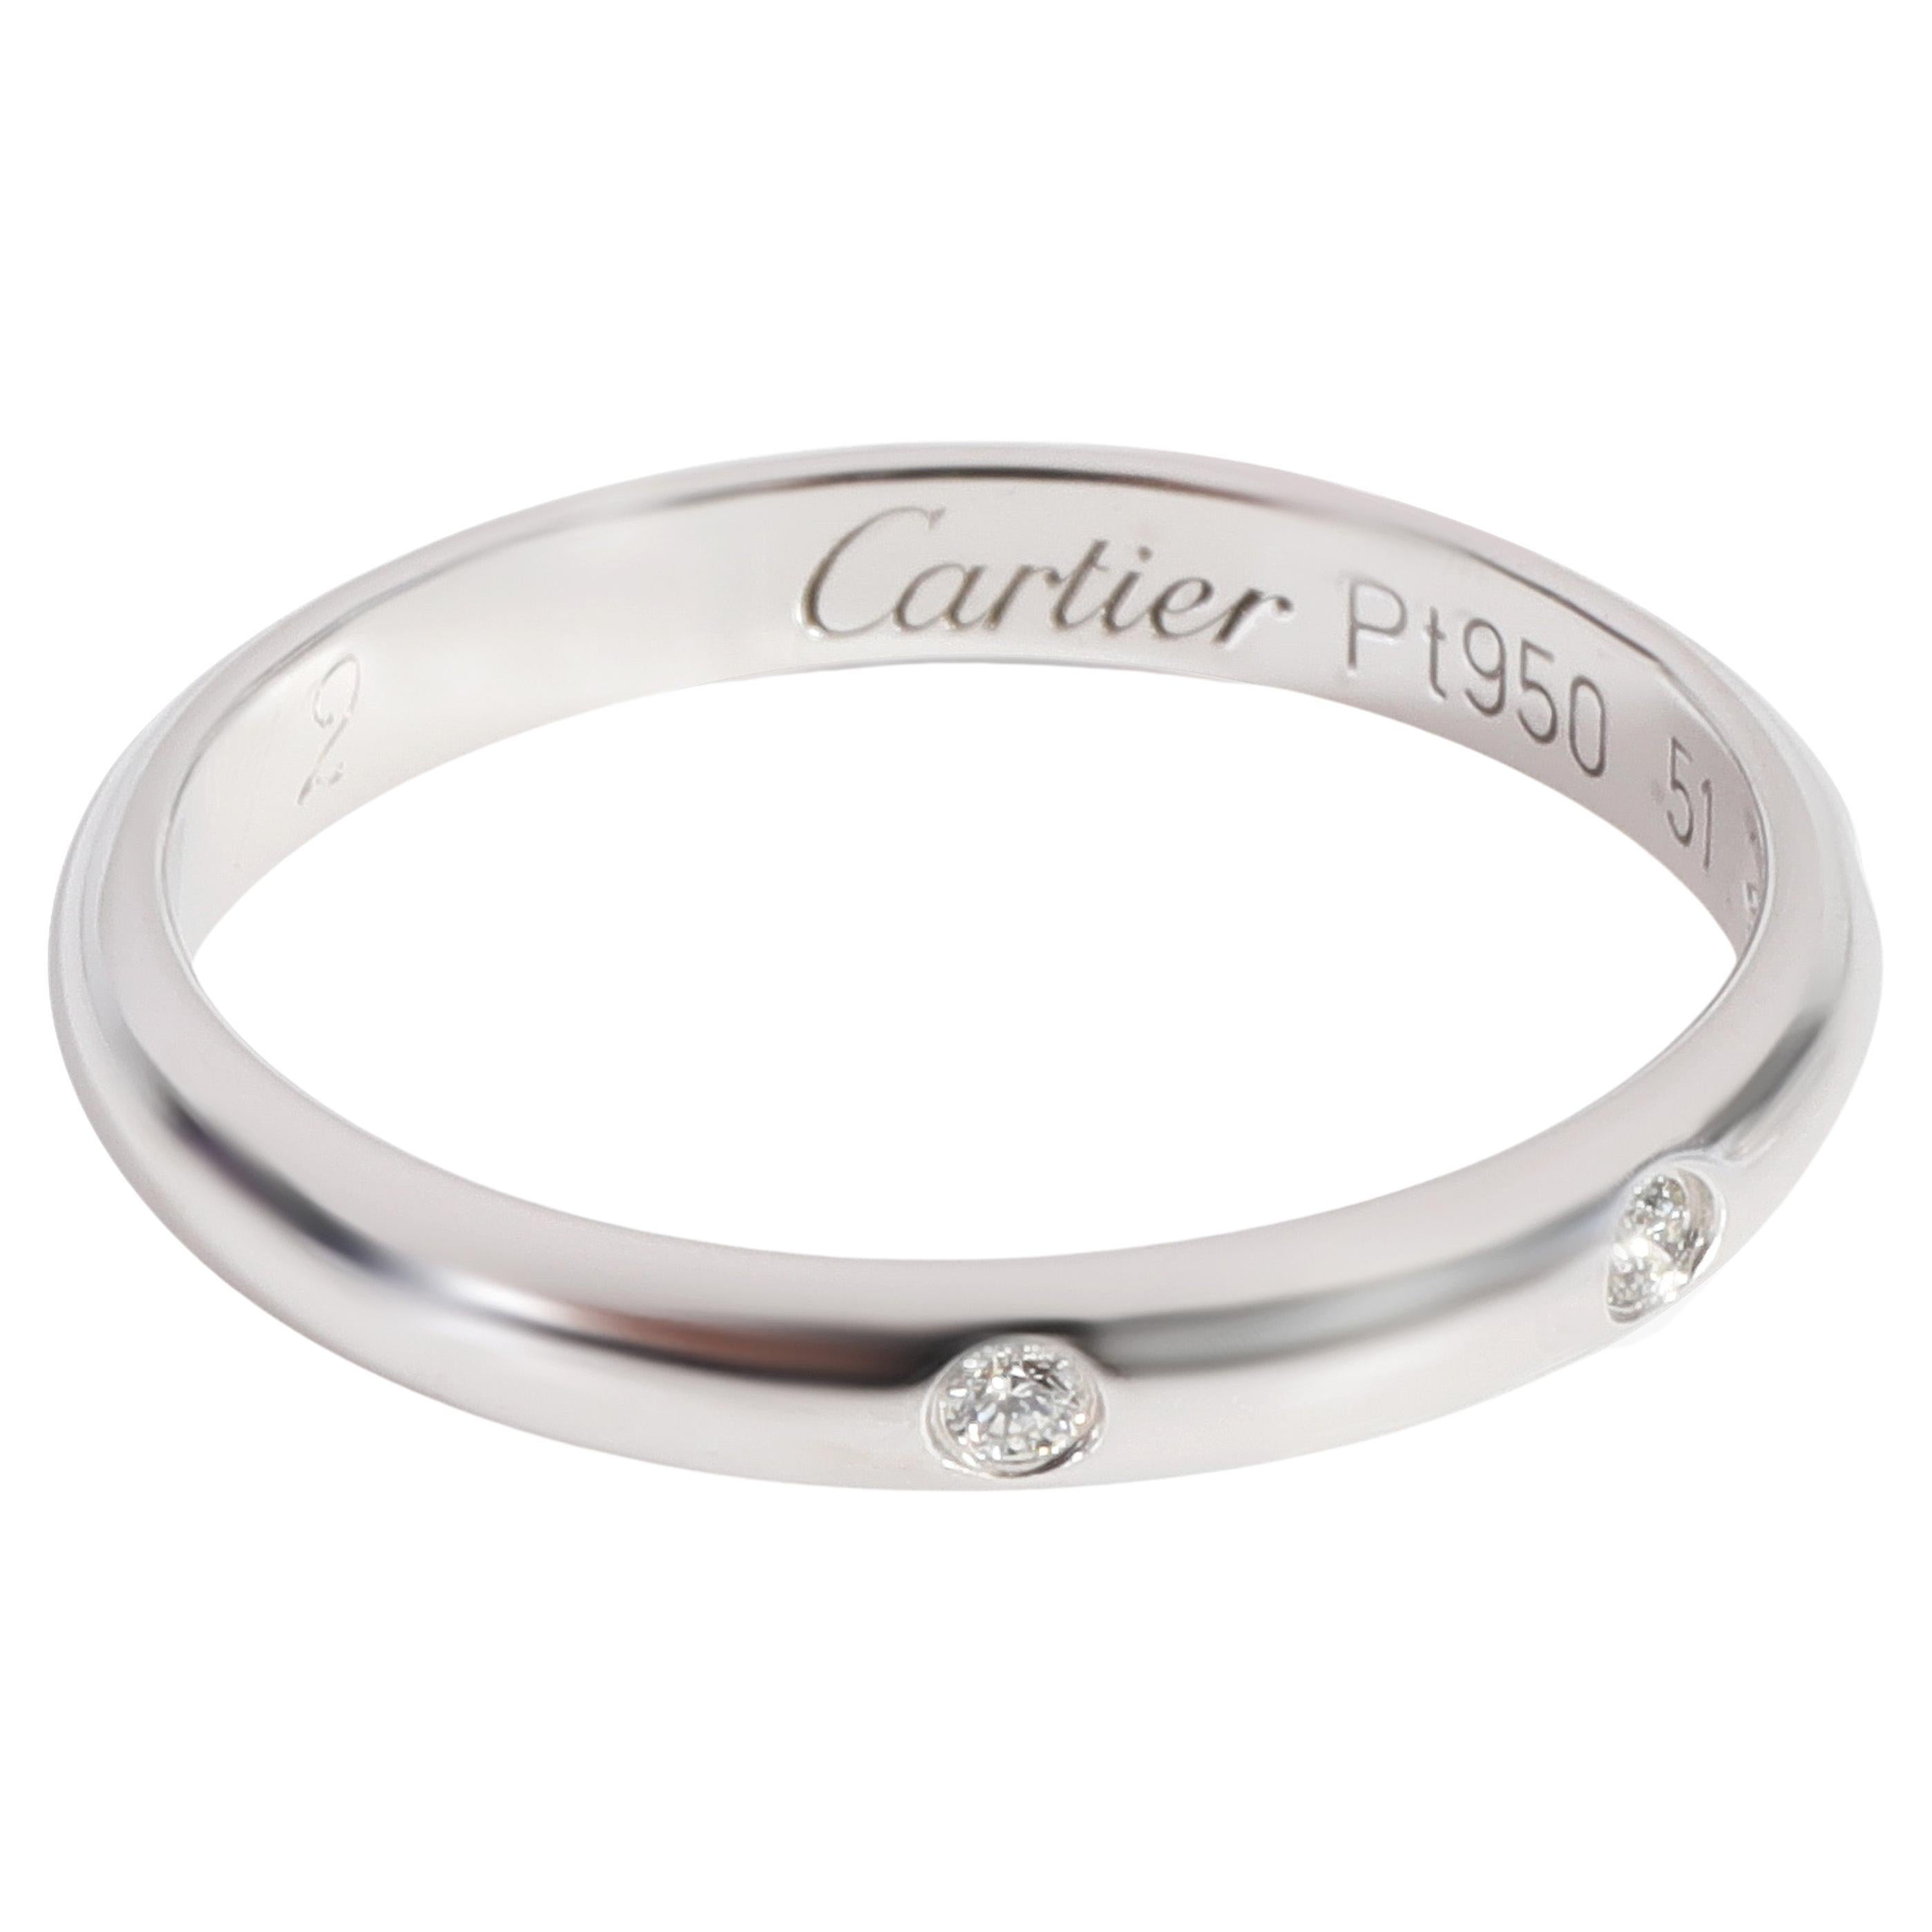 Cartier 1895 Diamond Wedding Band in Platinum 0.03 CTW